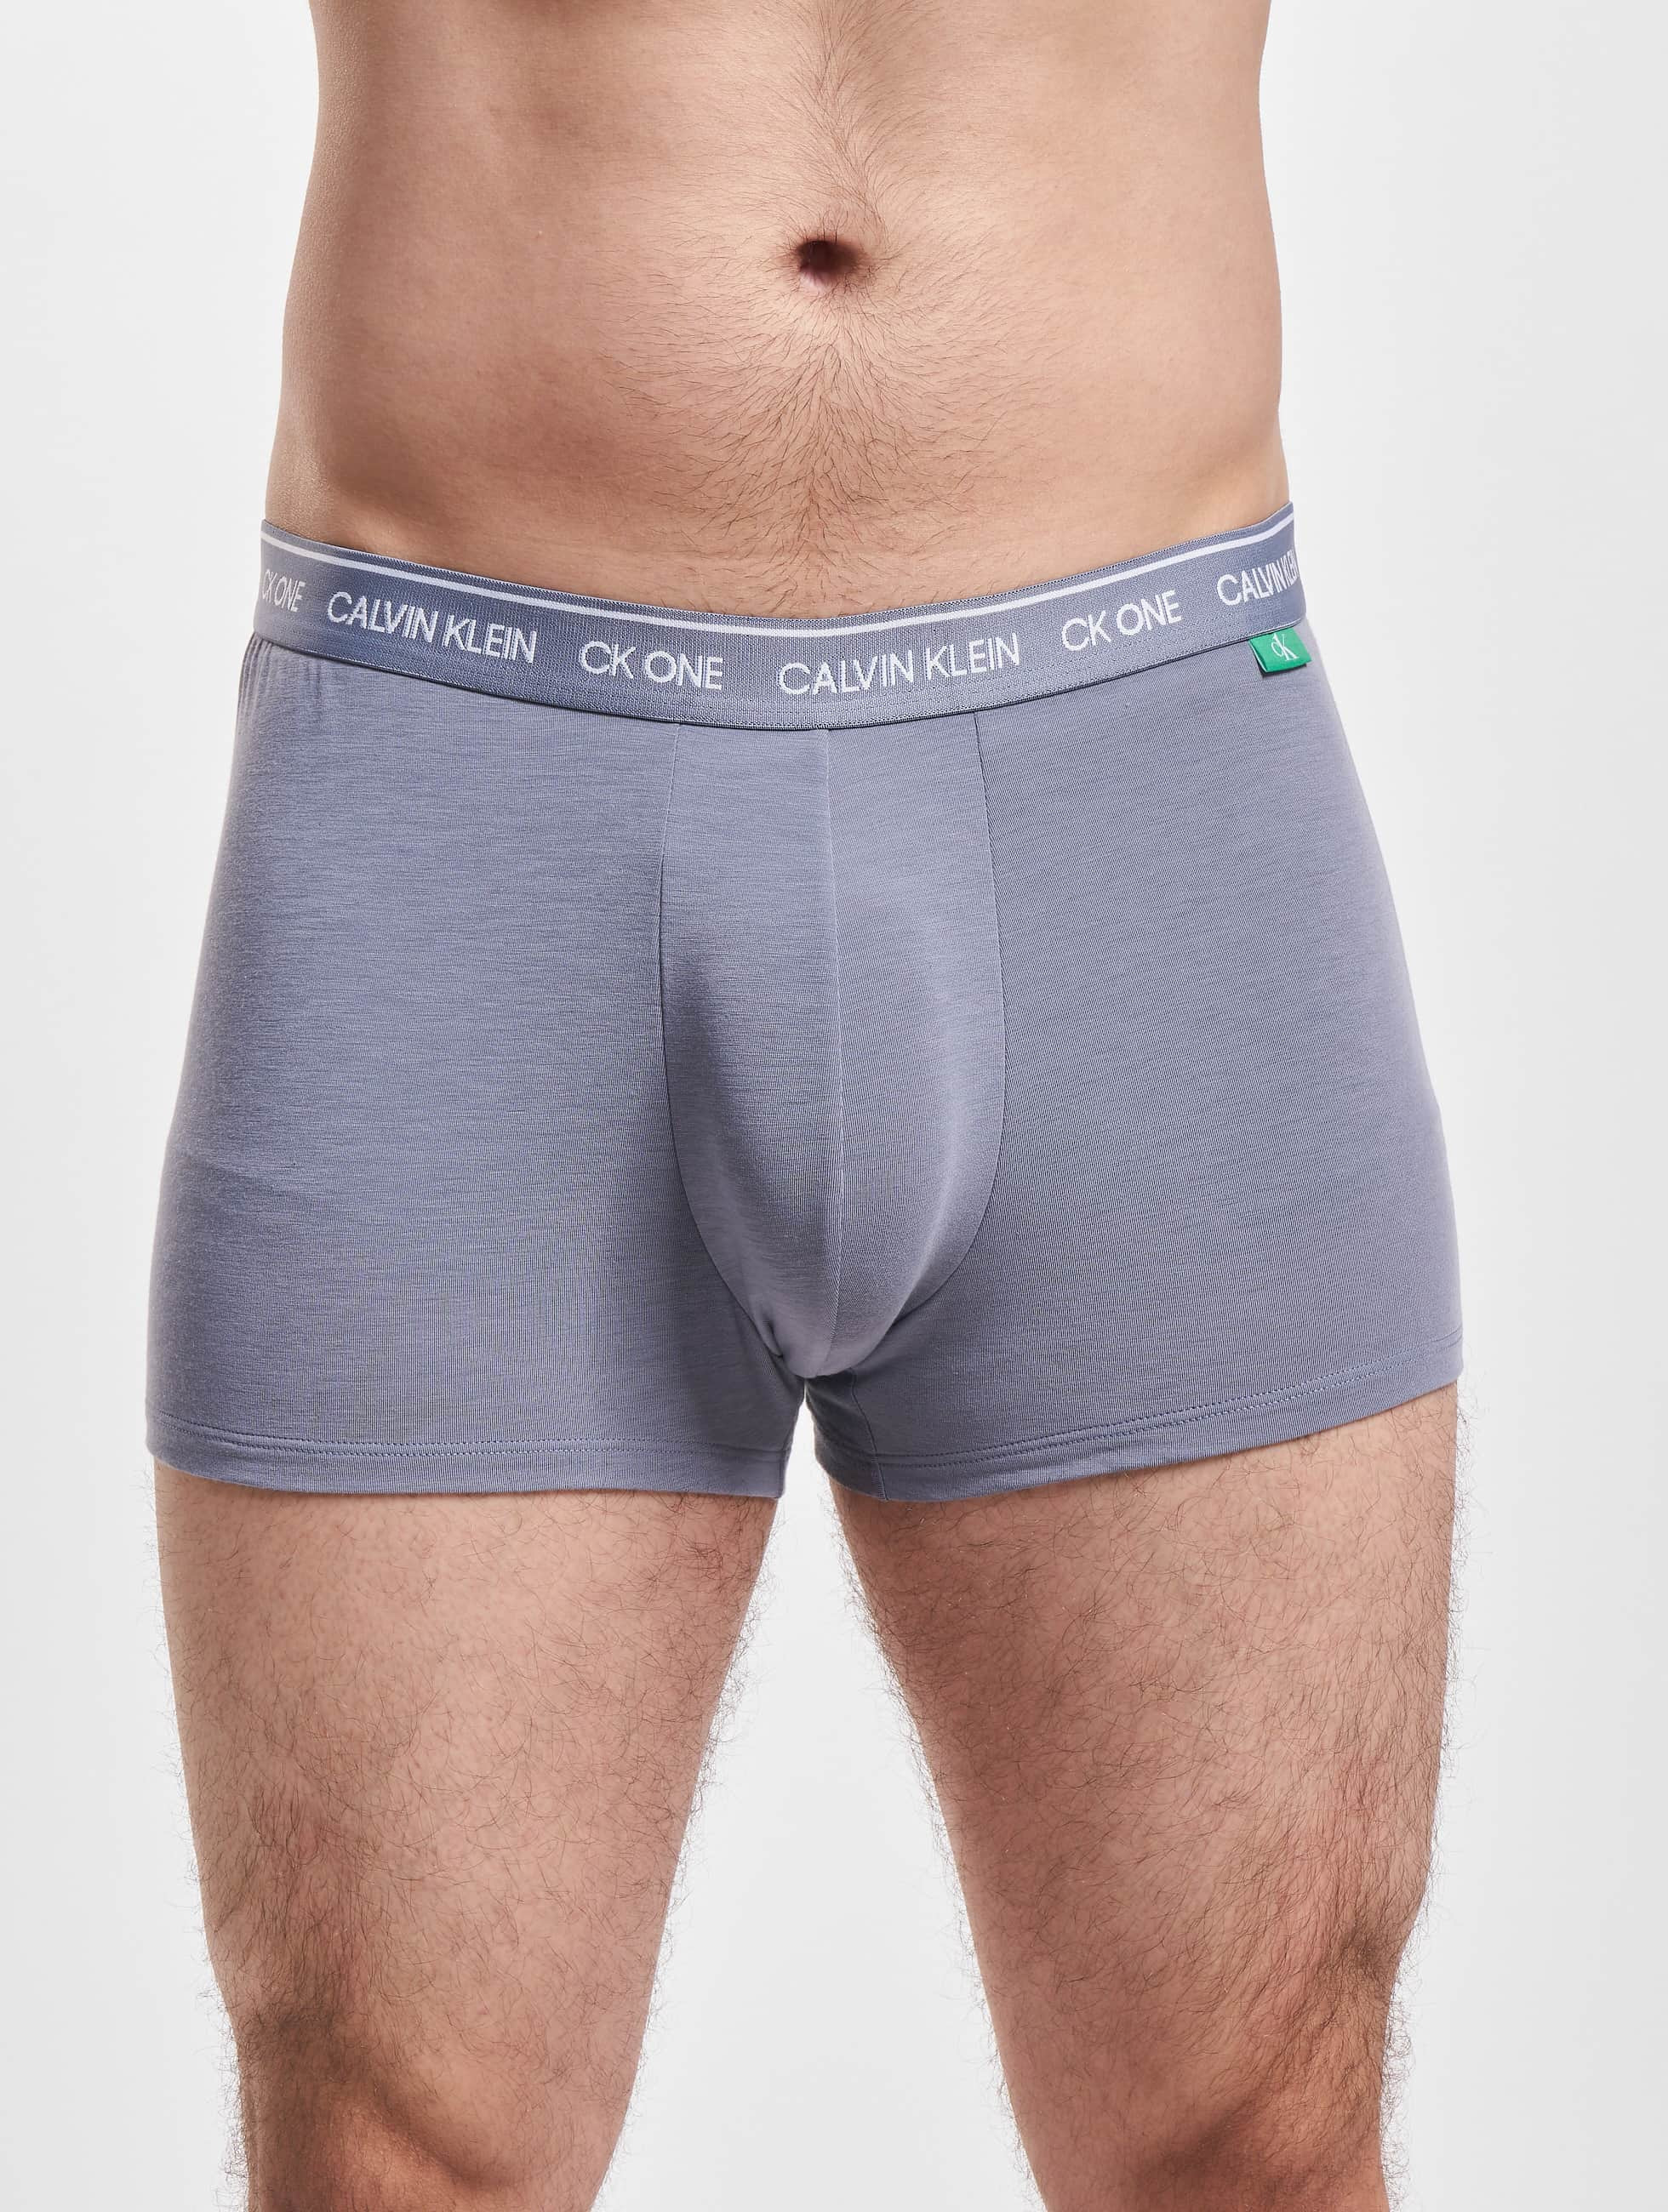 Calvin Klein Underwear / Beachwear / Boxer Short Trunk in blue 971931